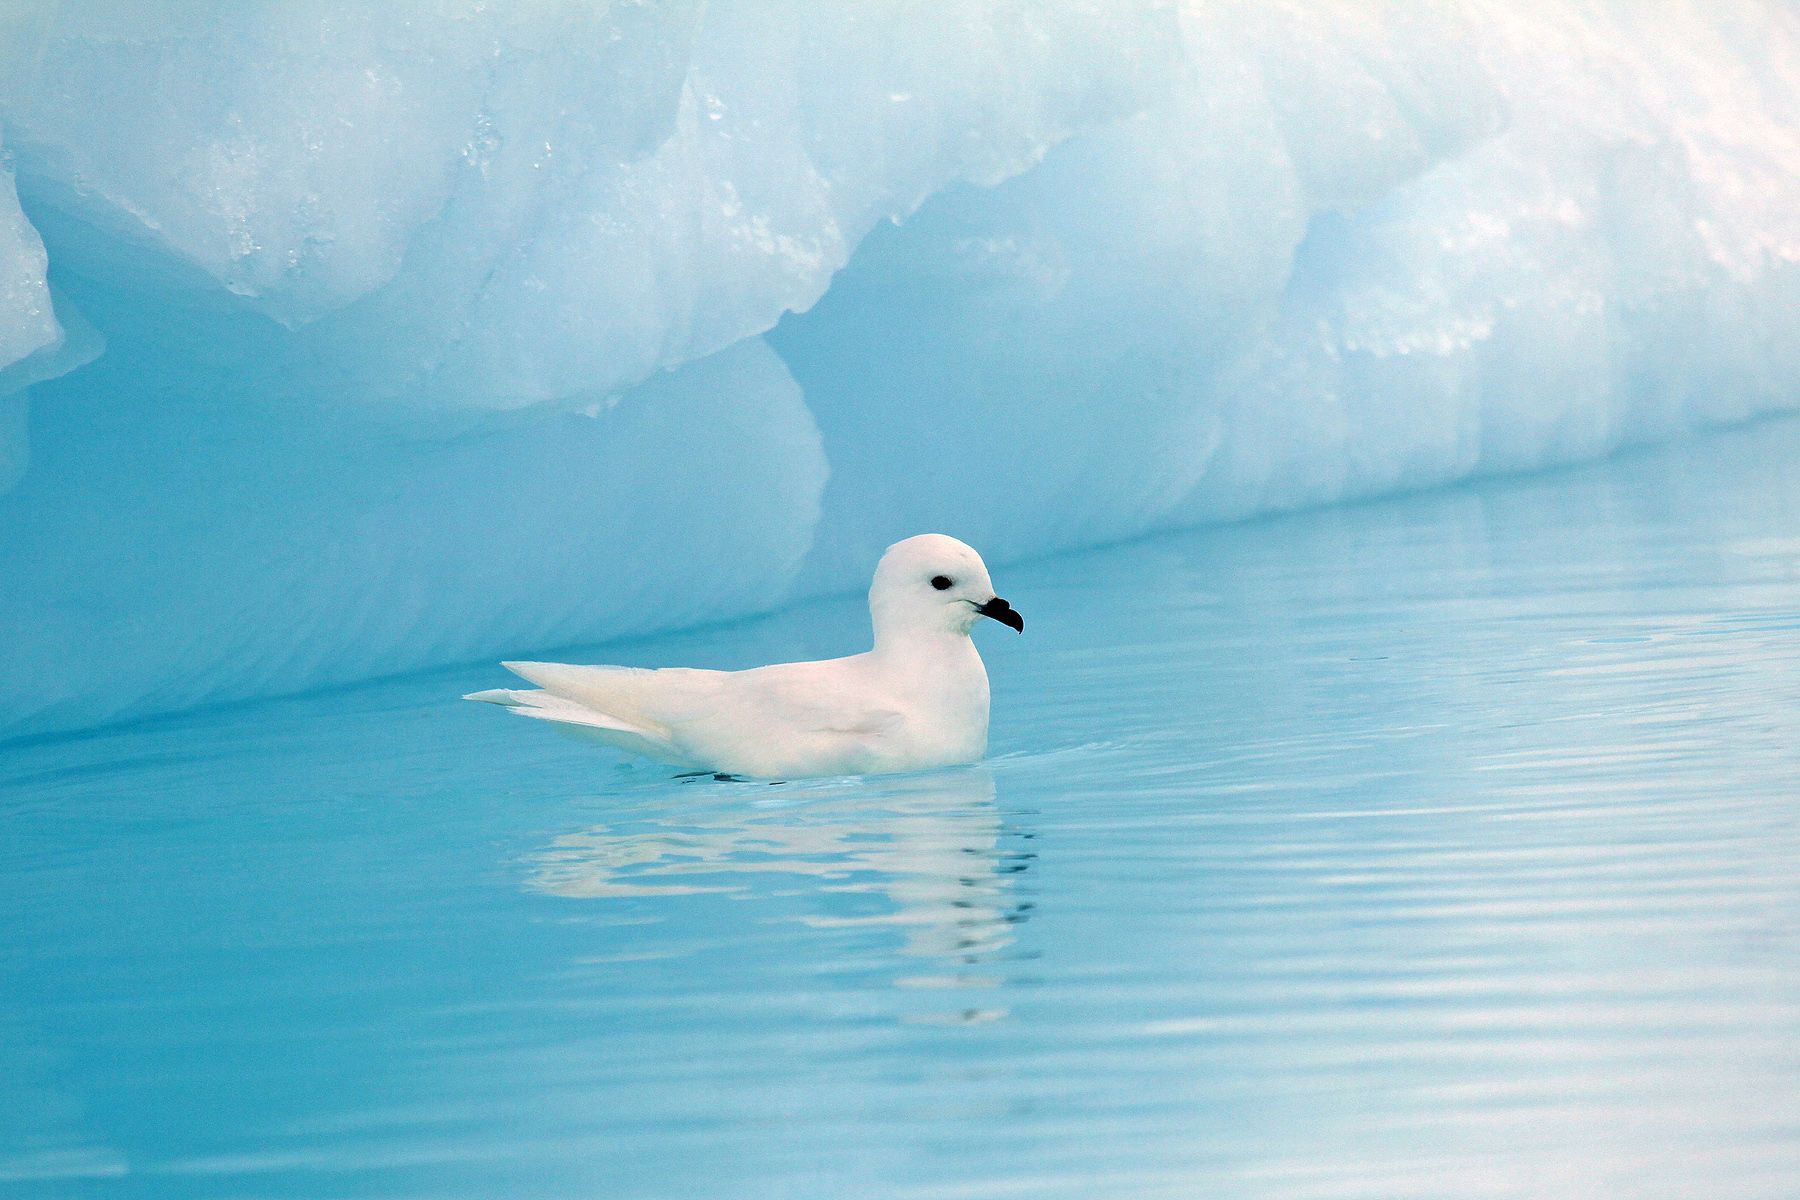 Snow Petrel, one of those dream birds for Antarctica photography tours